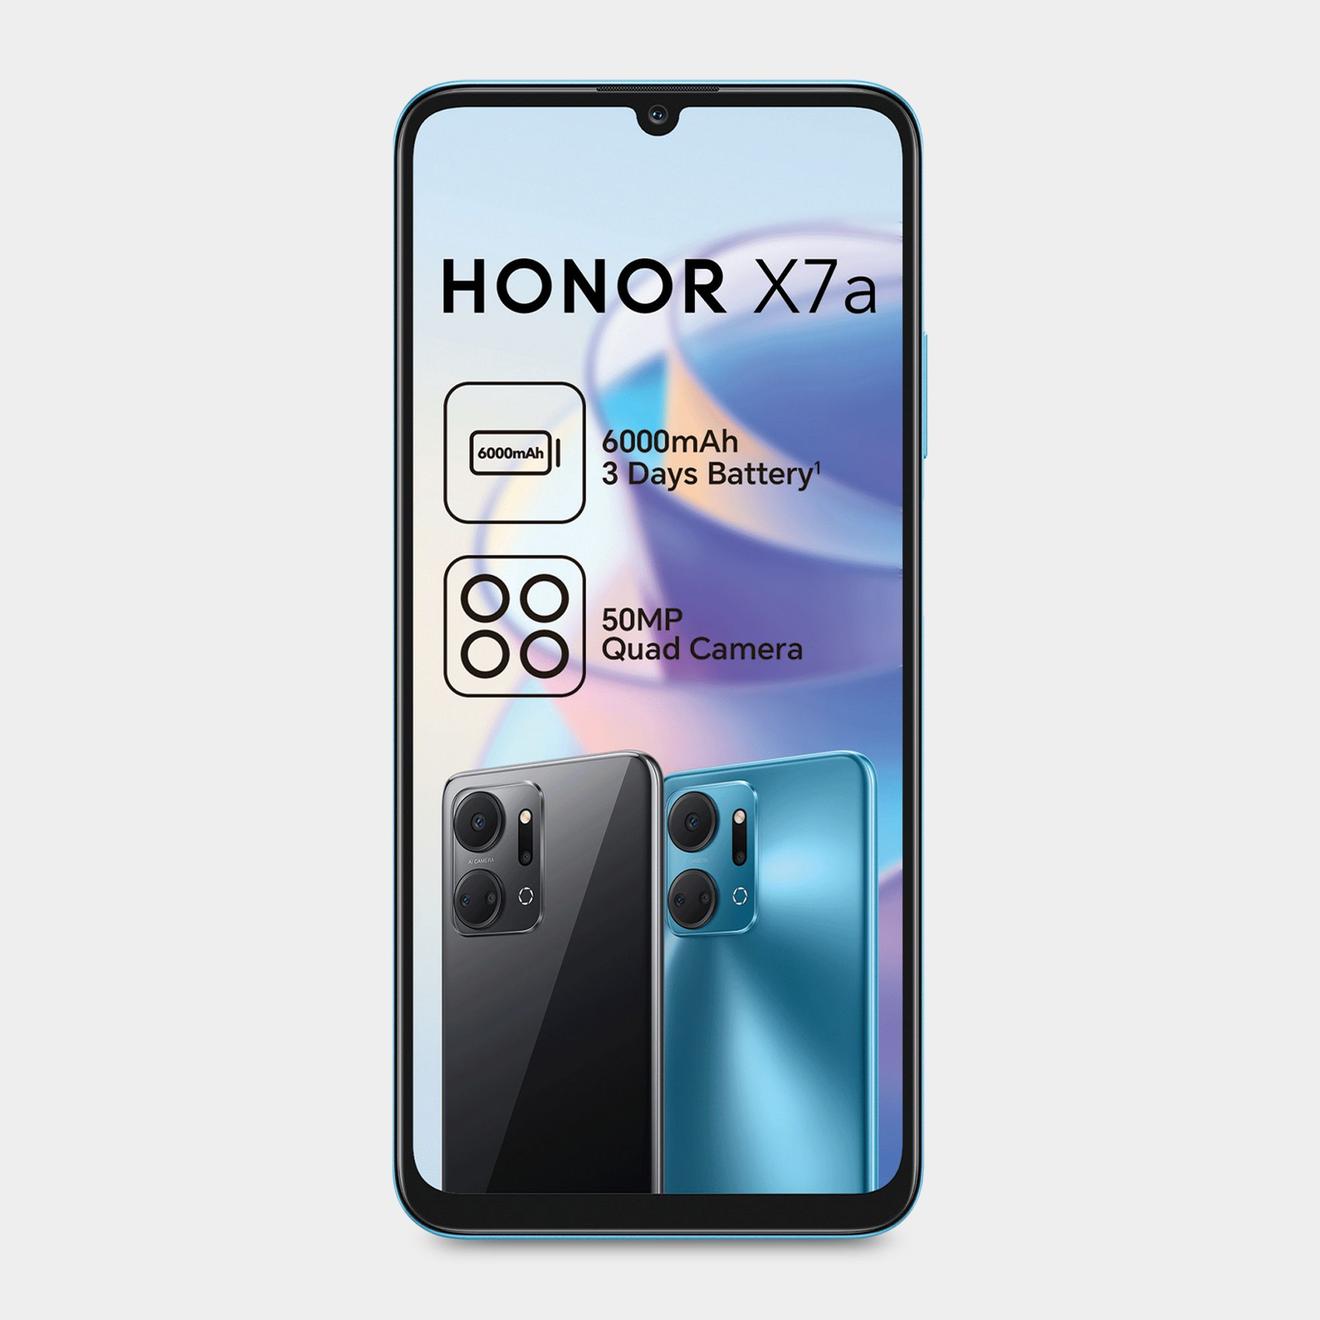 HONOR X7a Dual Sim +15GB Telkom Sim offers at R 4999 in Hi